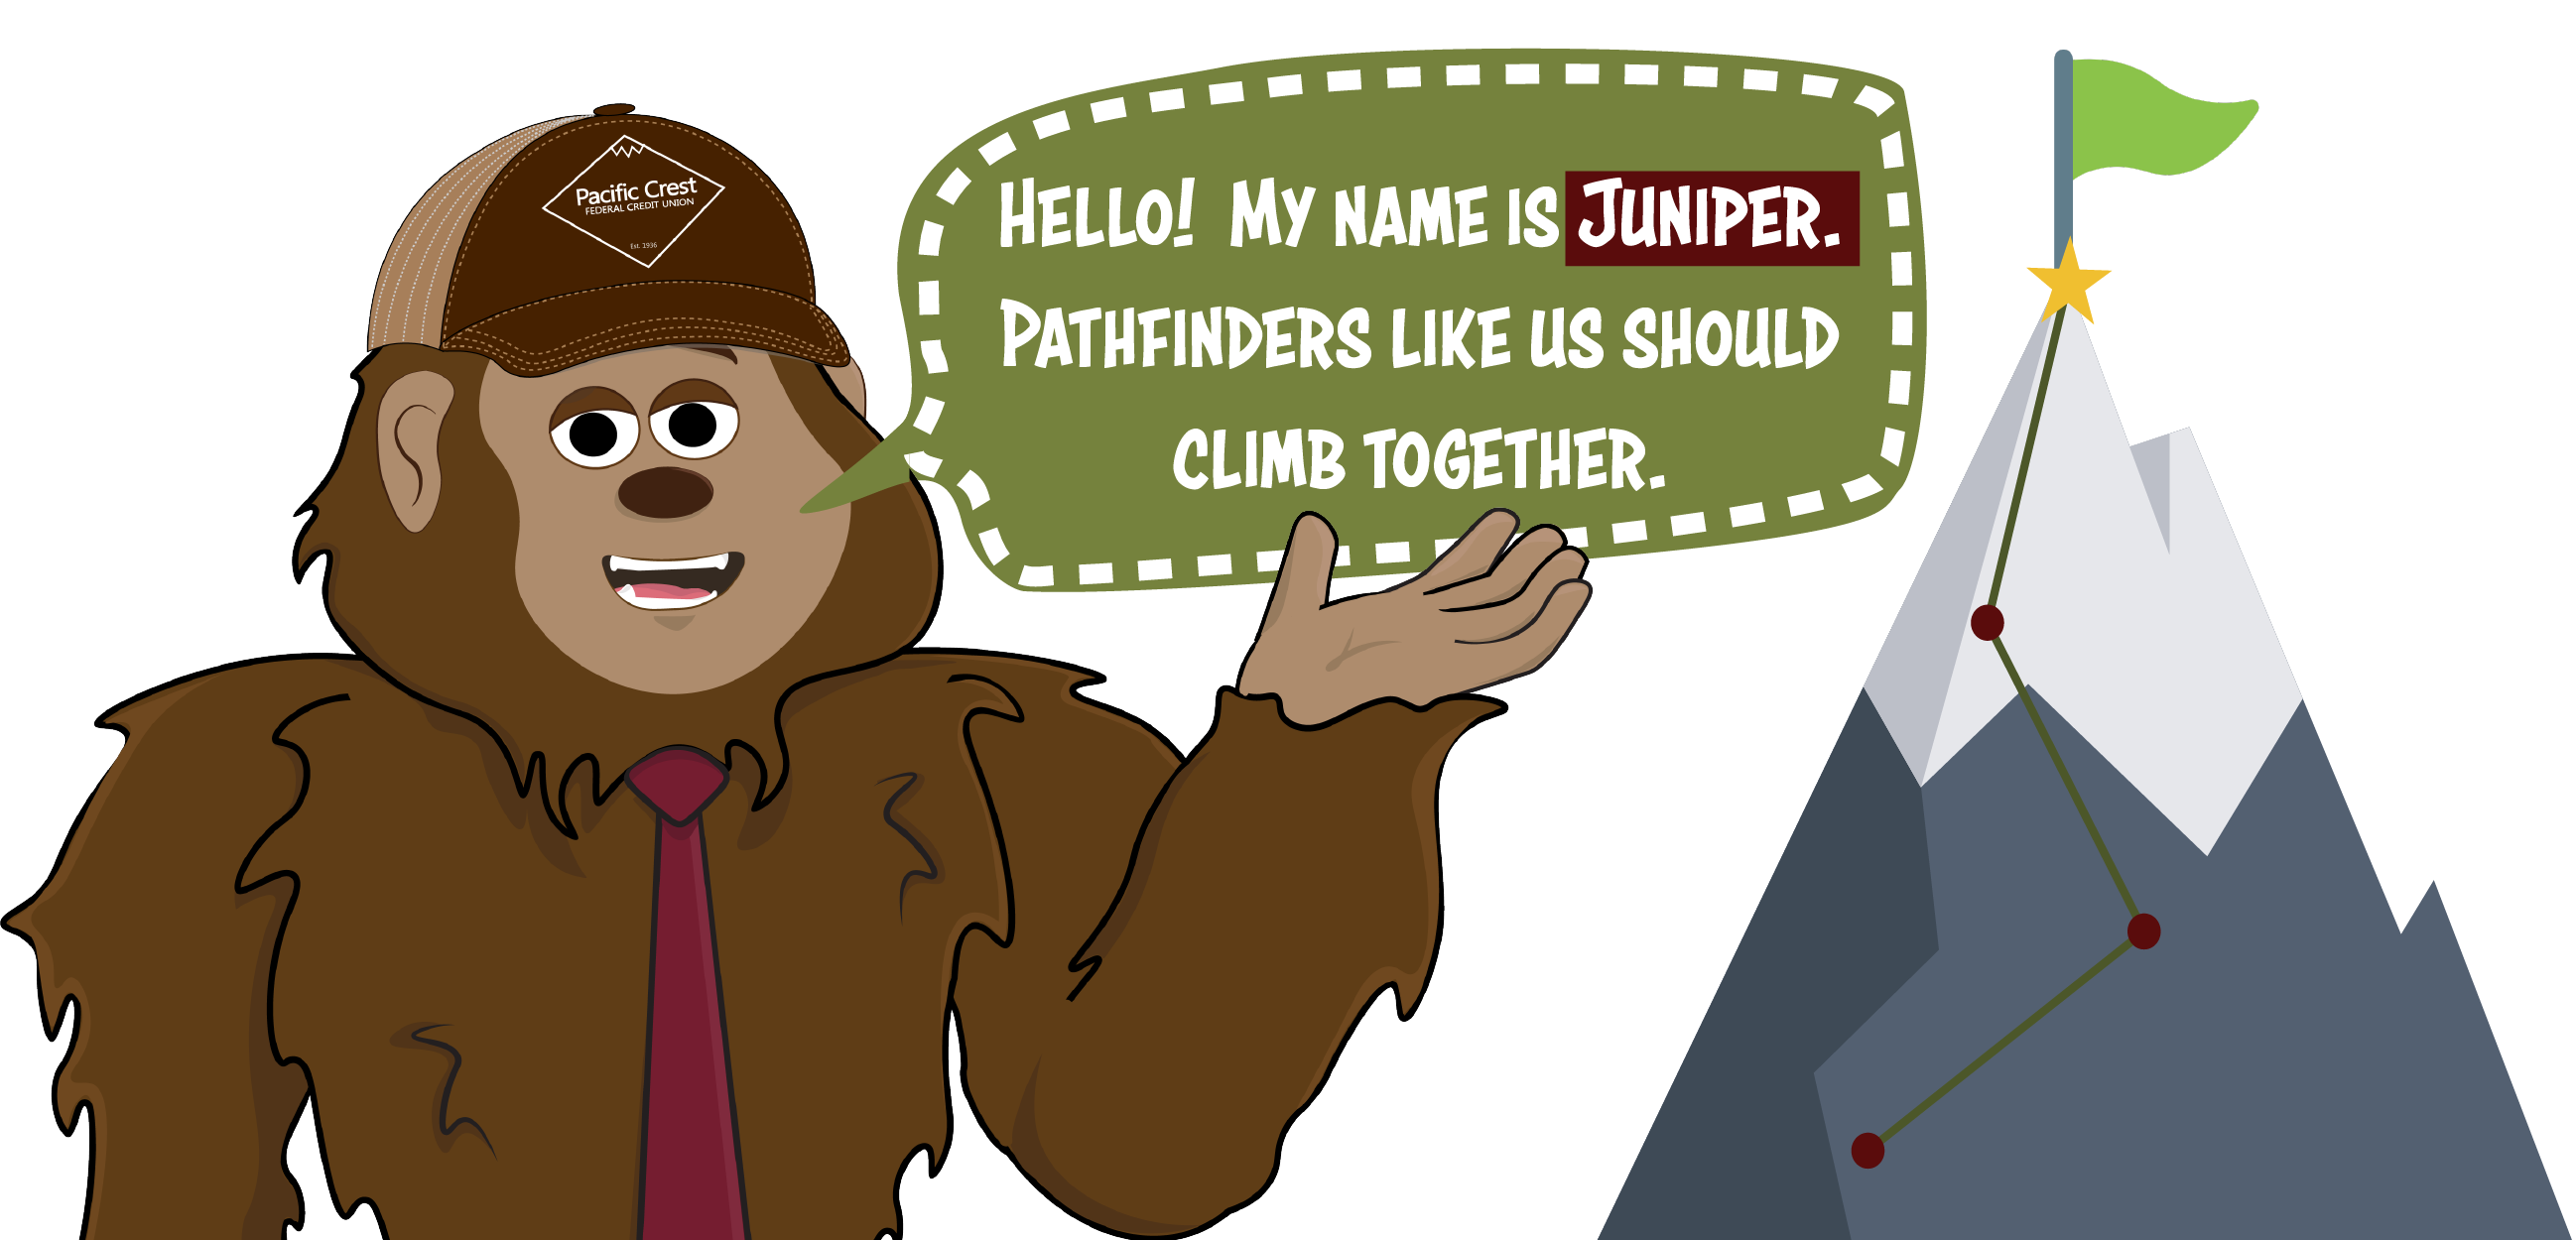 Juniper welcomes you